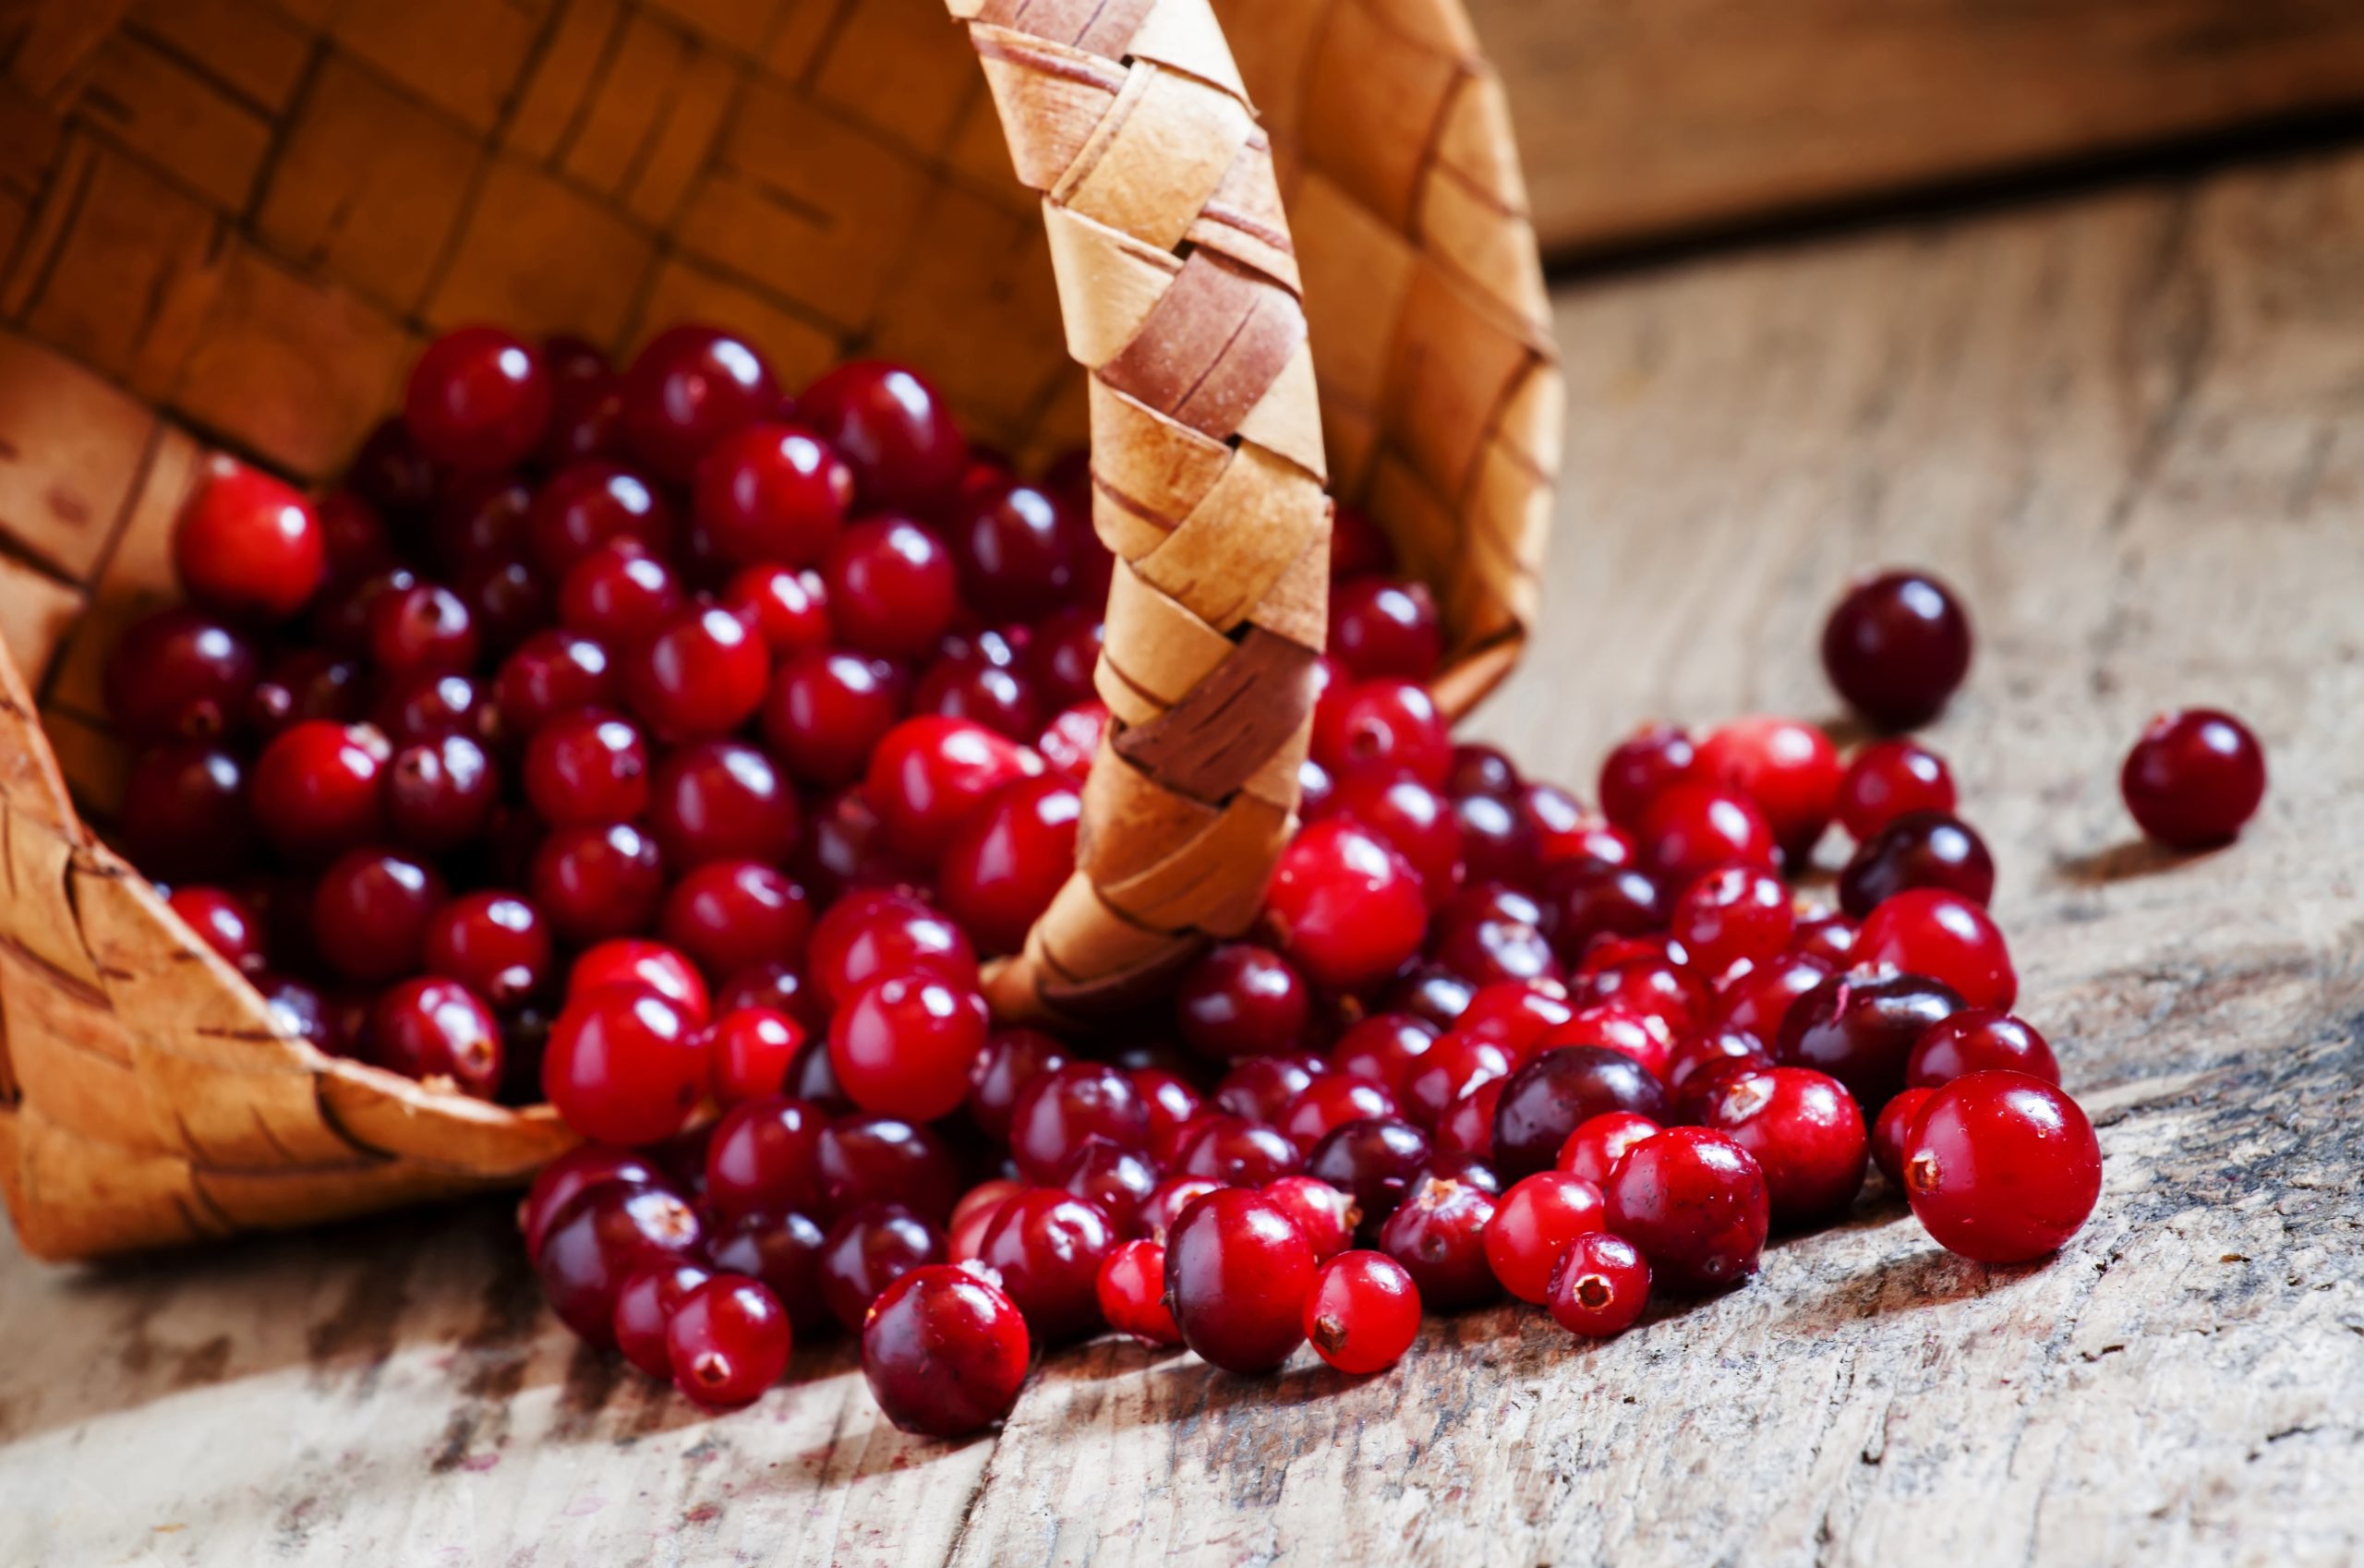 cranberry juice benefits, benefits of cranberry juice, cranberry benefits, benefits of cranberry